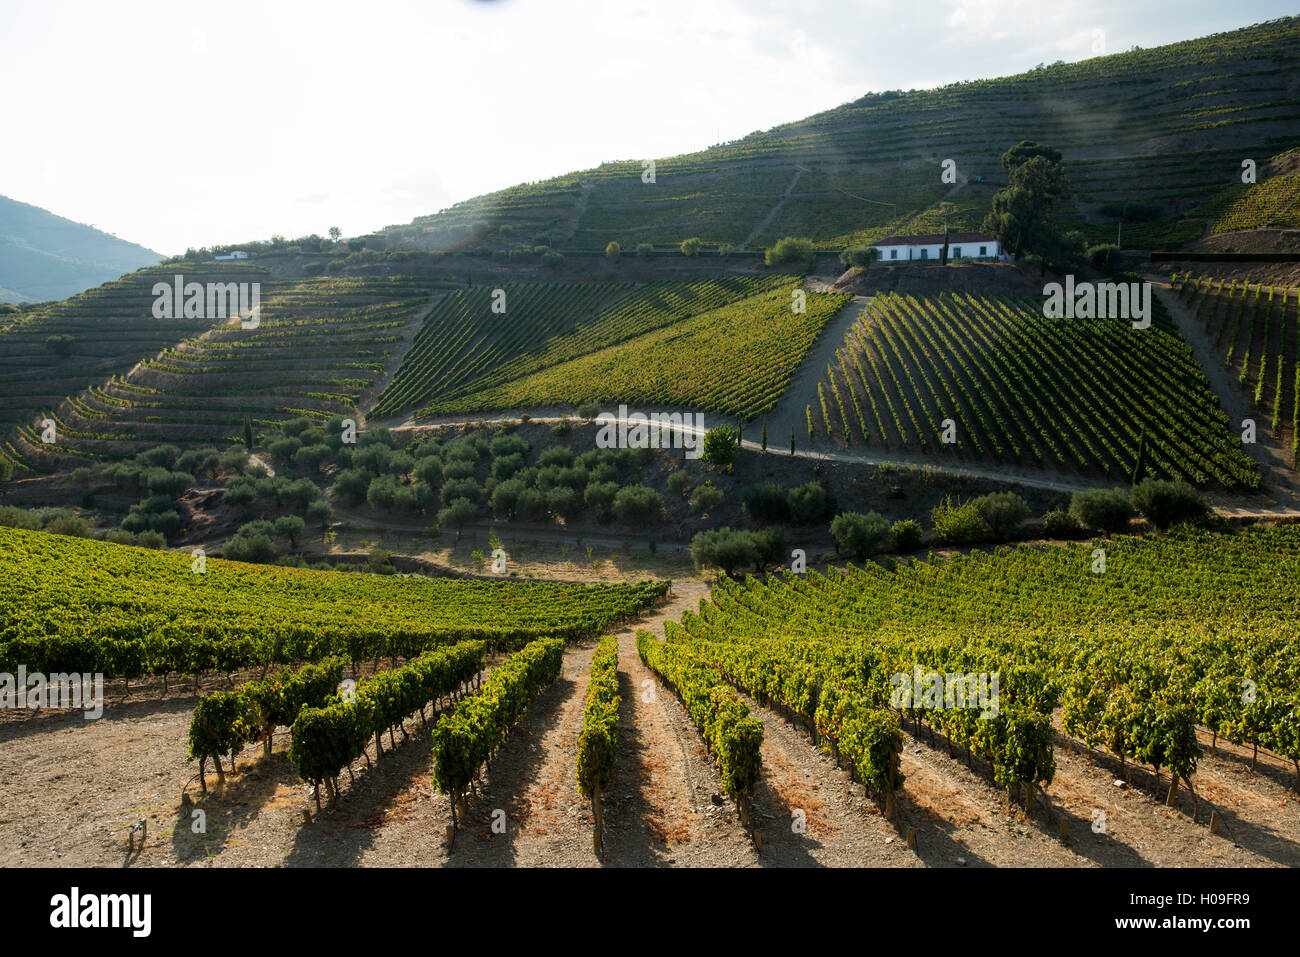 Grape vines ripening in the sun at a vineyard in the Alto Douro region, Portugal, Europe Stock Photo